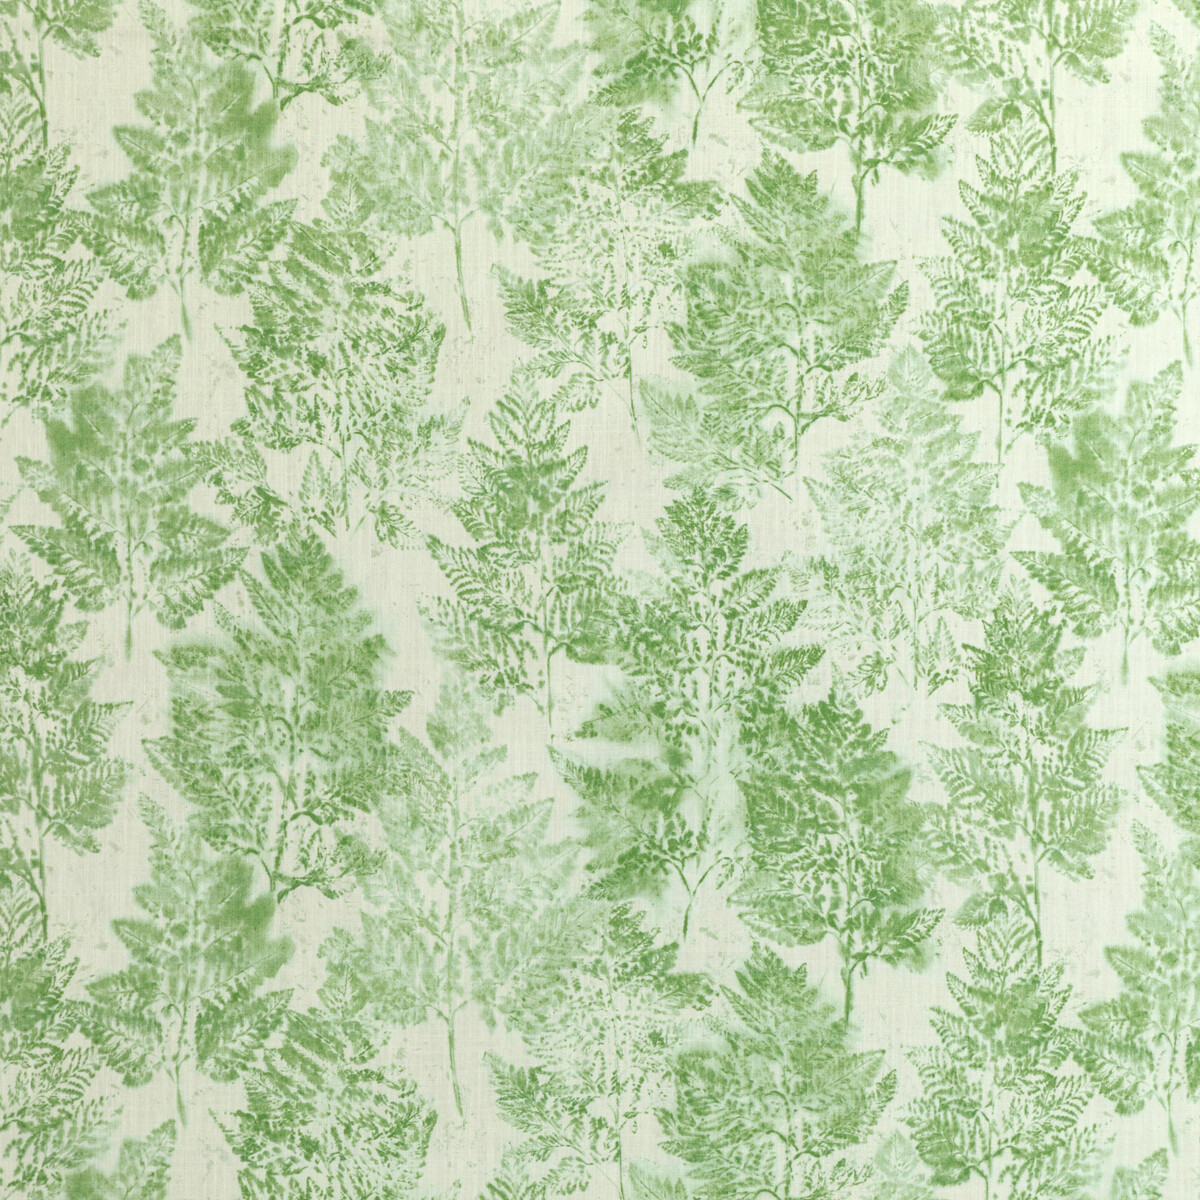 Kravet Basics Heiki Fern.3.0 Heiki Fern Multipurpose Fabric in Emerald/White/Green